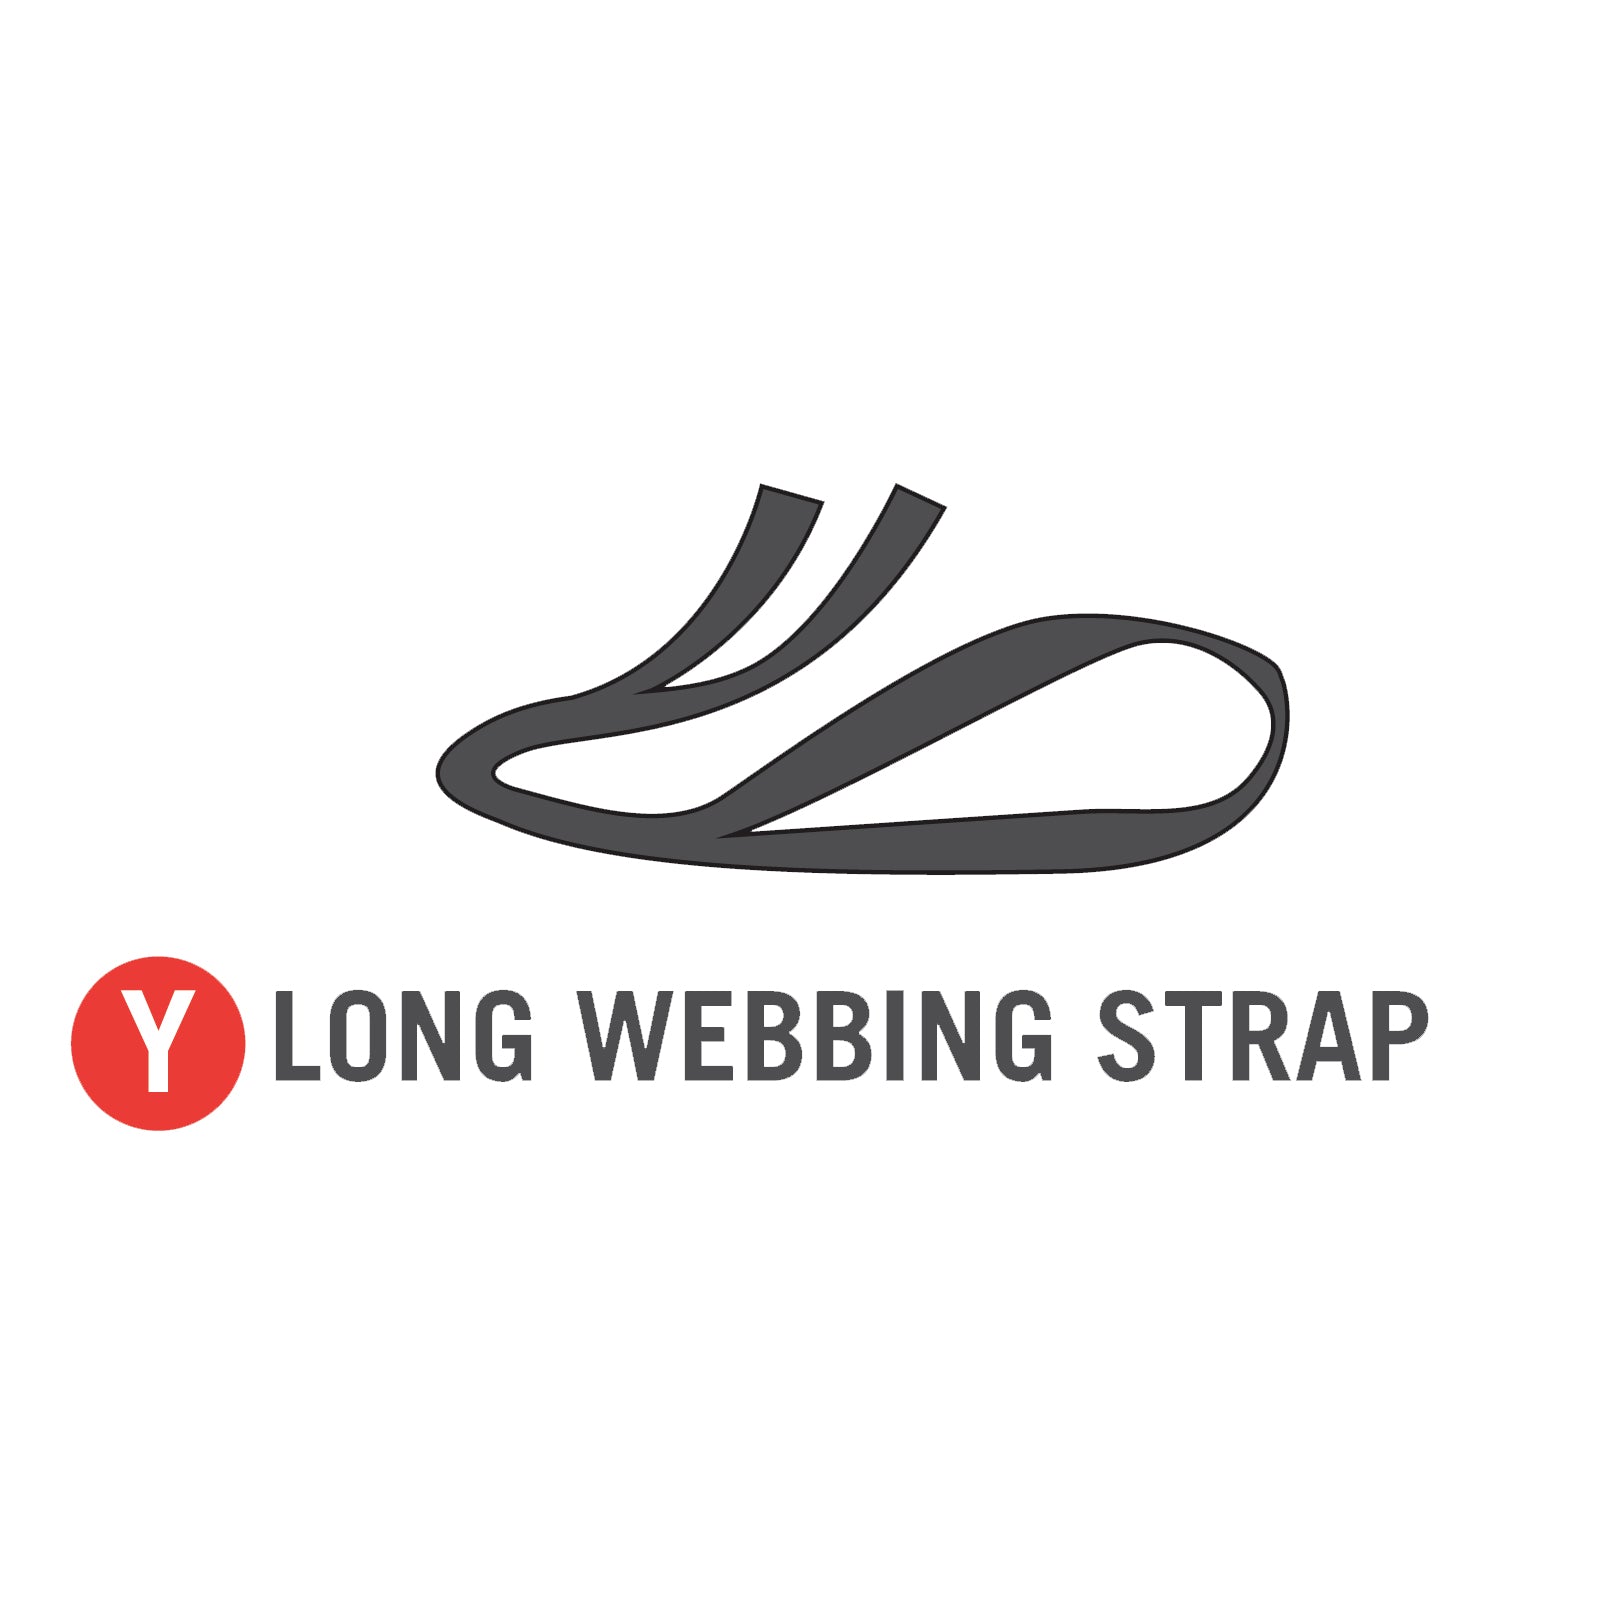 Long Webbing Strap for 11x18 foot Horizon Trampoline (Part Y).